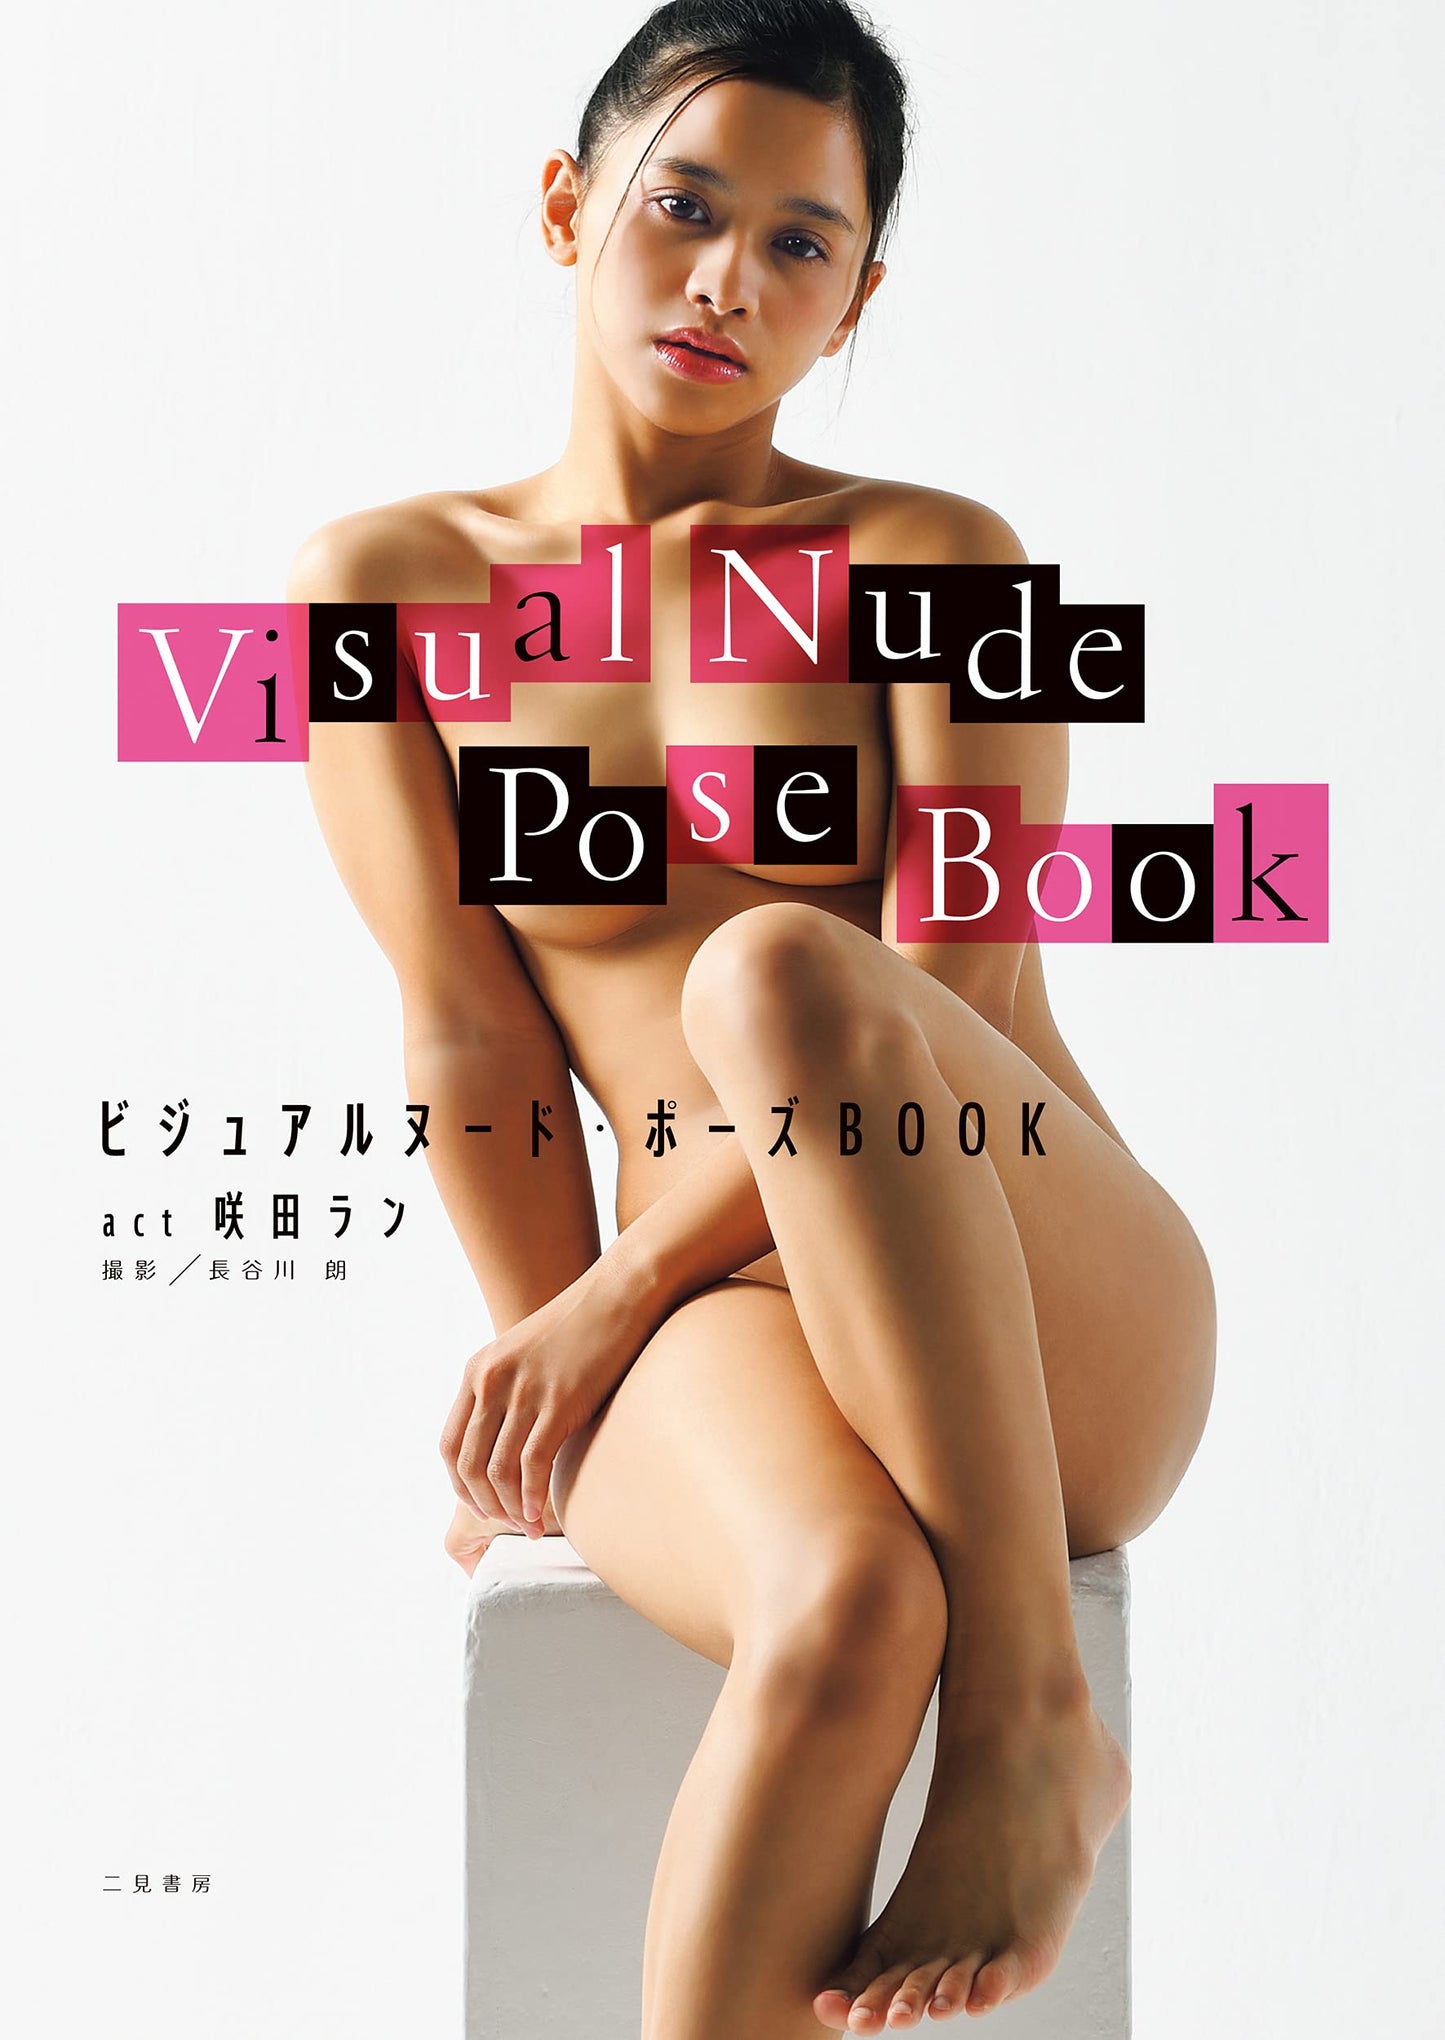 Visual Nude Pose Book Ran Sakita